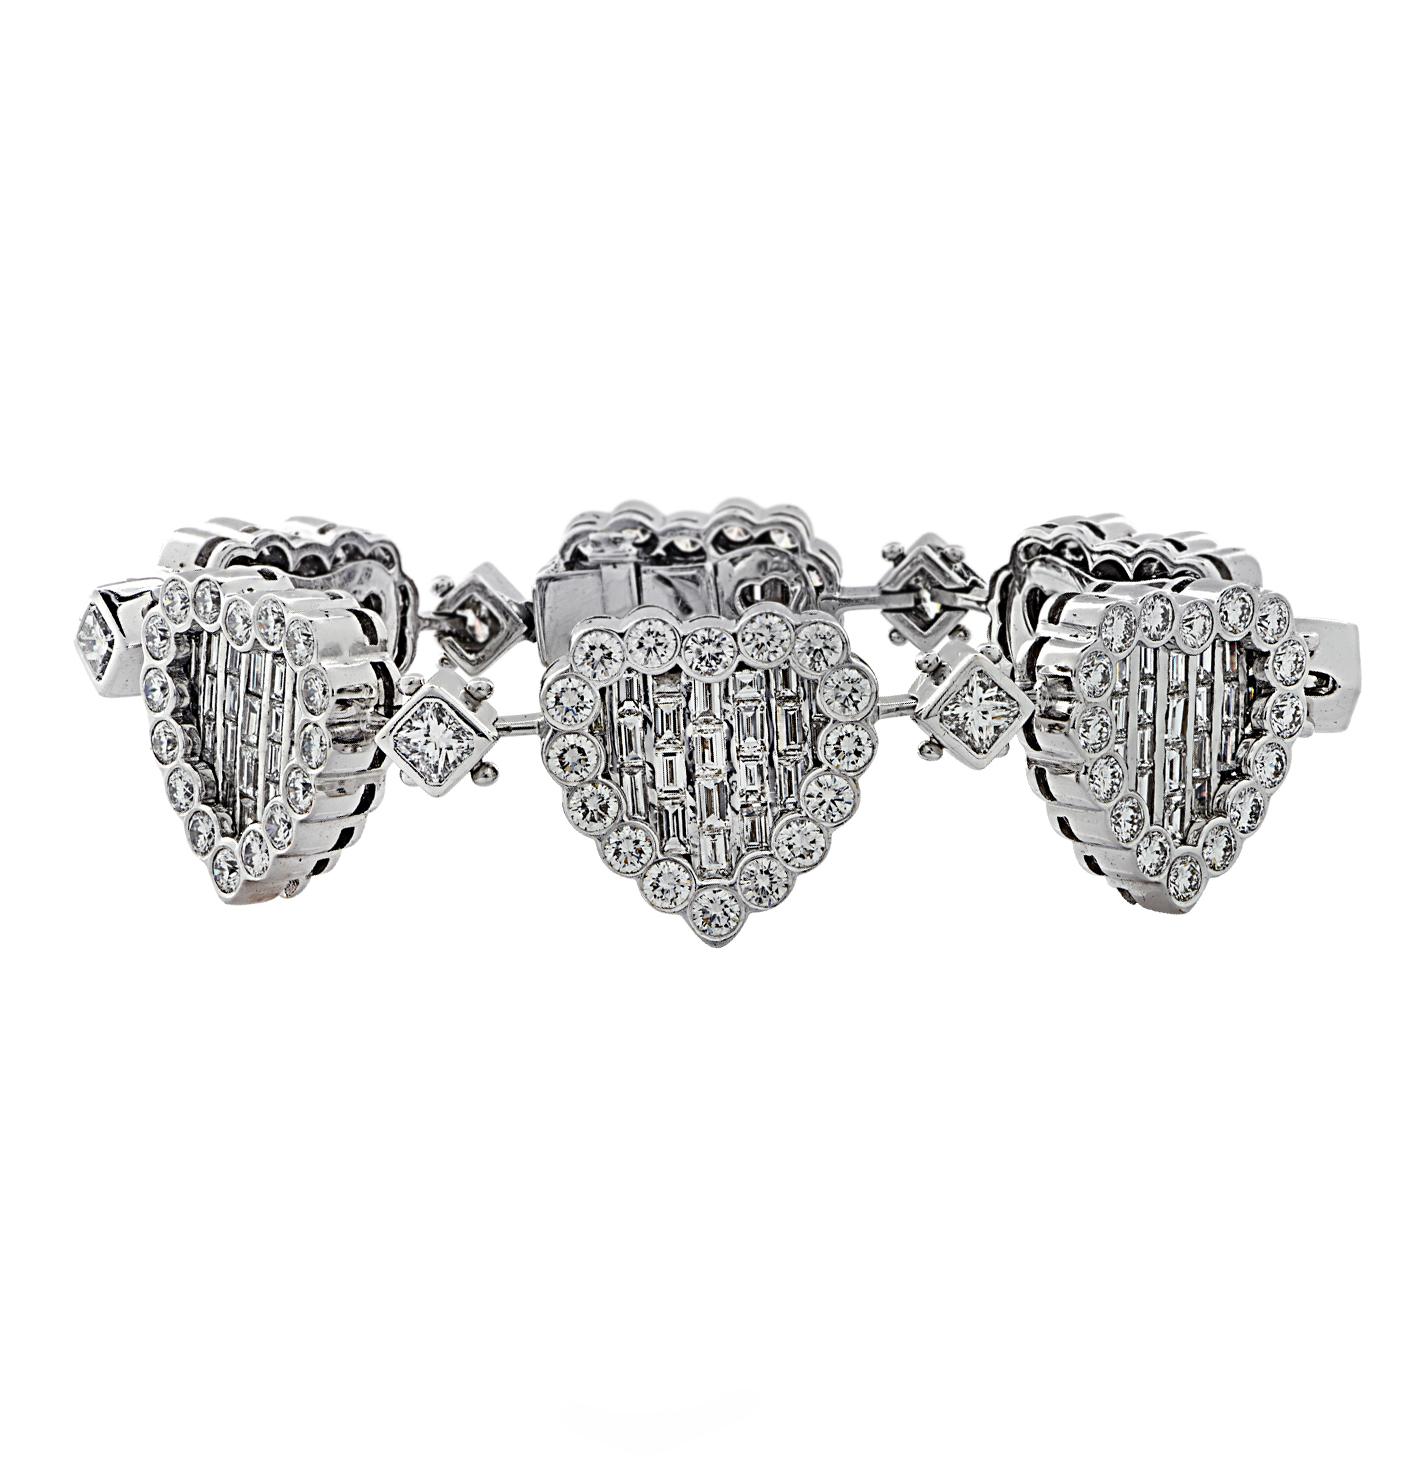 Women's 17.7 Carat Diamond Heart Bracelet